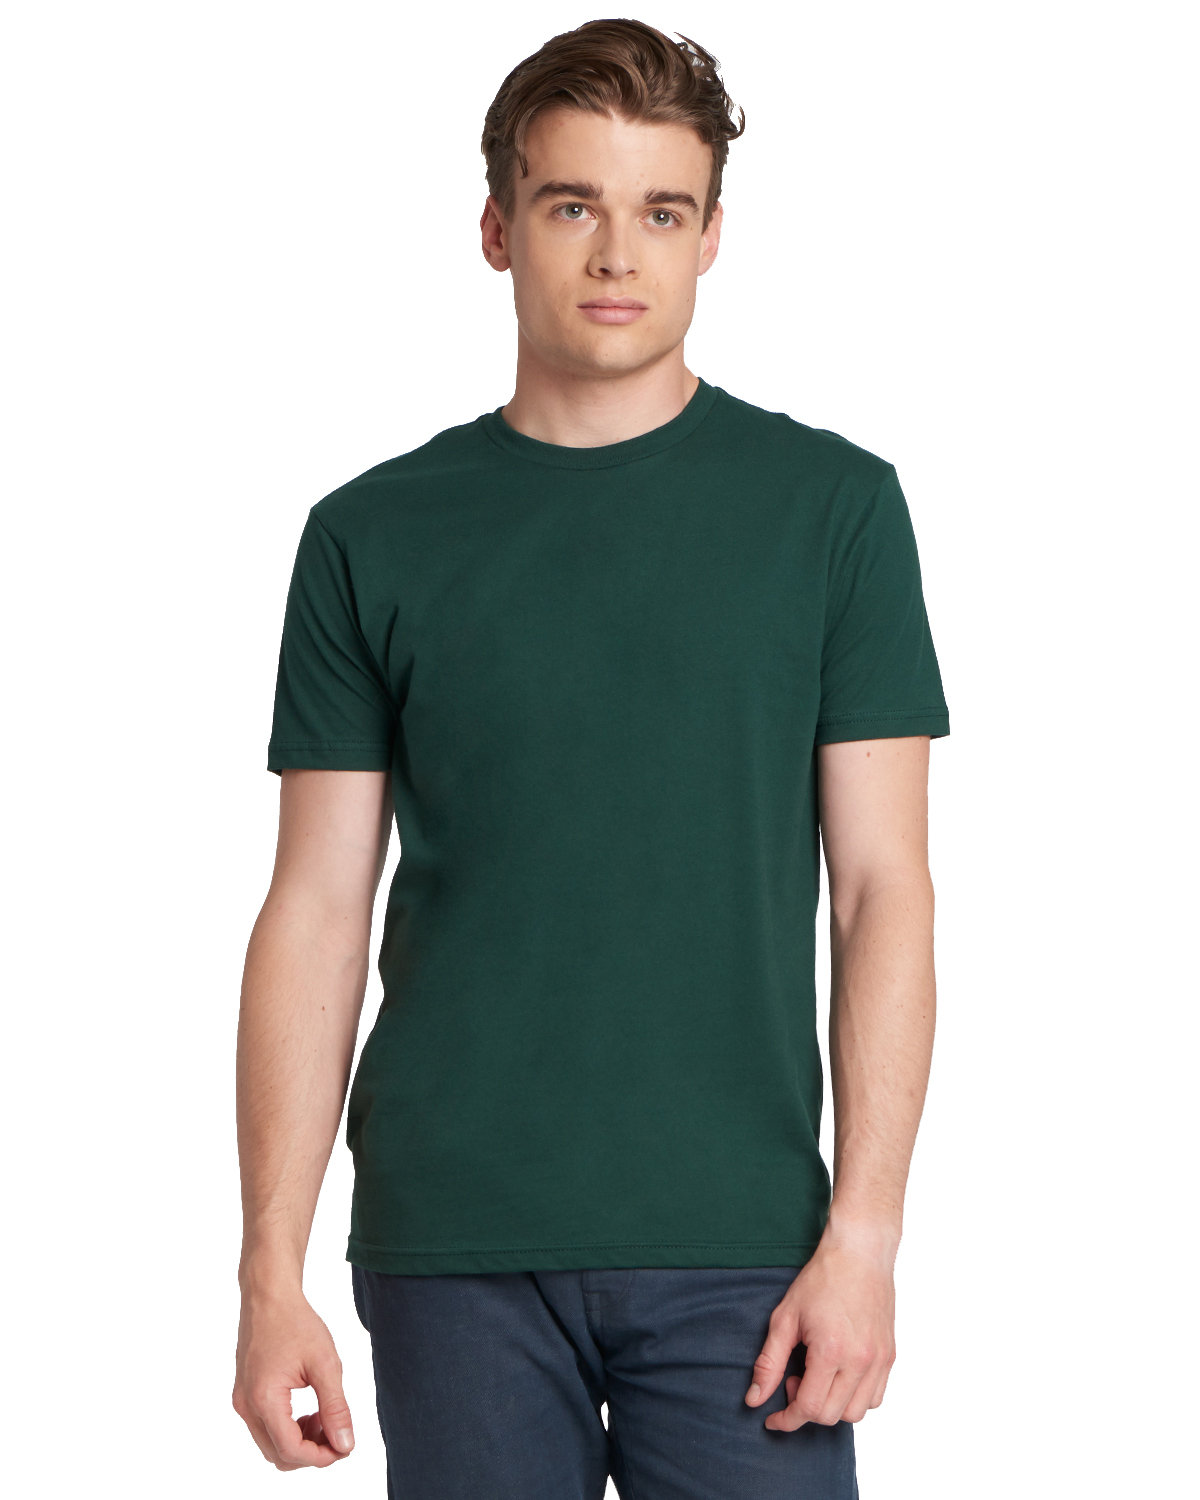 Next Level Apparel Men's Premium Crew Neck T-Shirt 3600 Basic Tee 20 colors